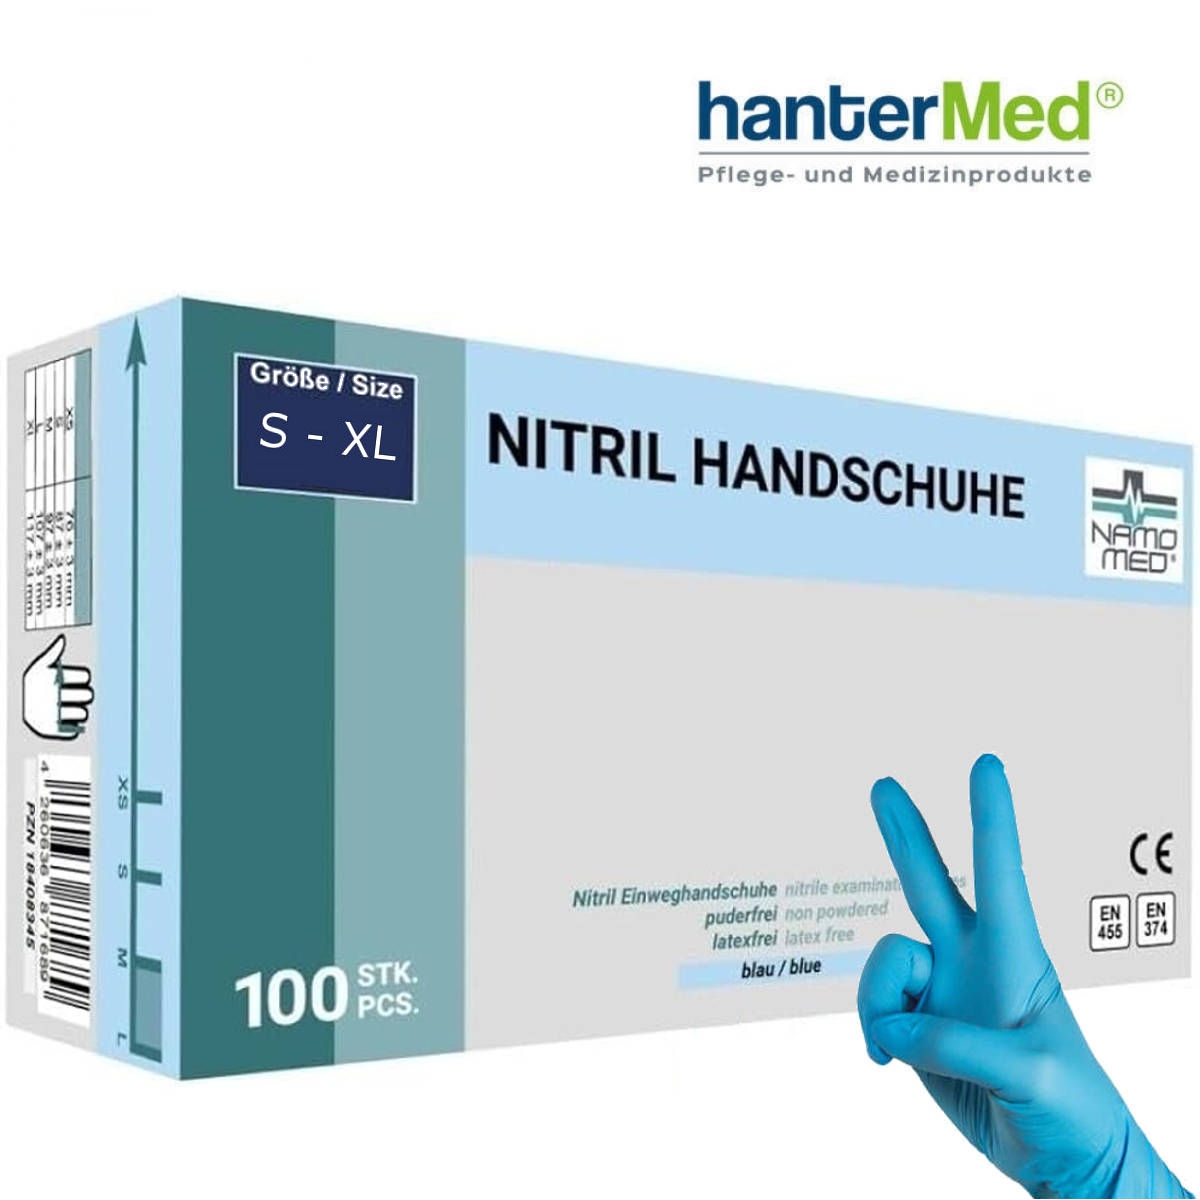 NamoMed® Nitril Handschuhe S-XL blau, VE10